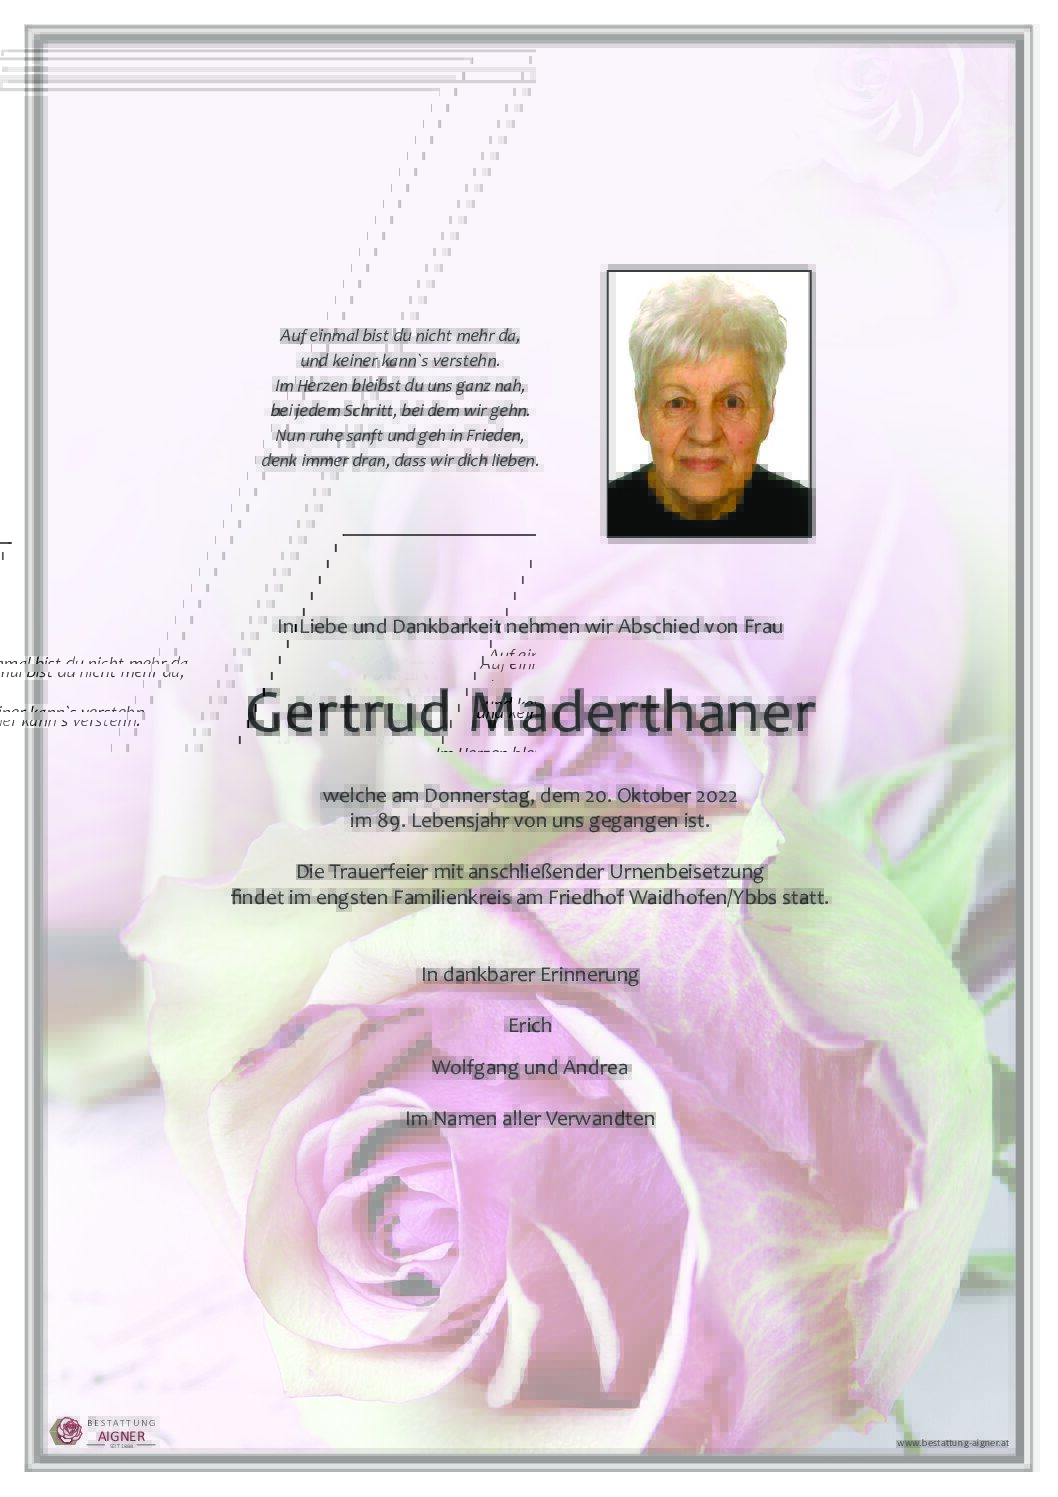 Gertrud Maderthaner